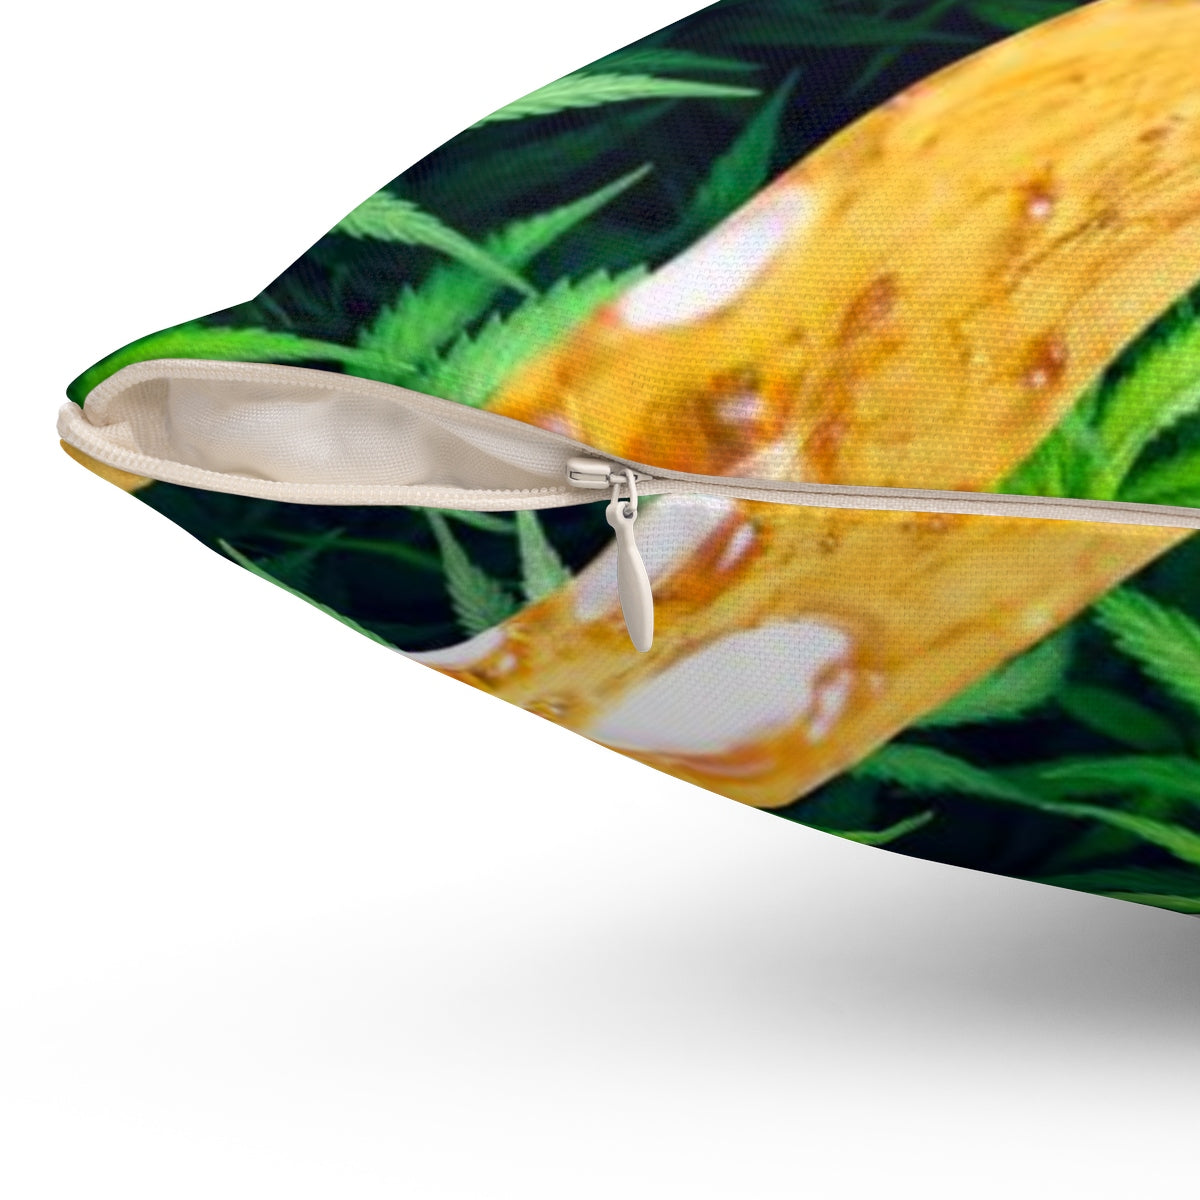 CannaDab Cannabis Spun Polyester Square Pillow